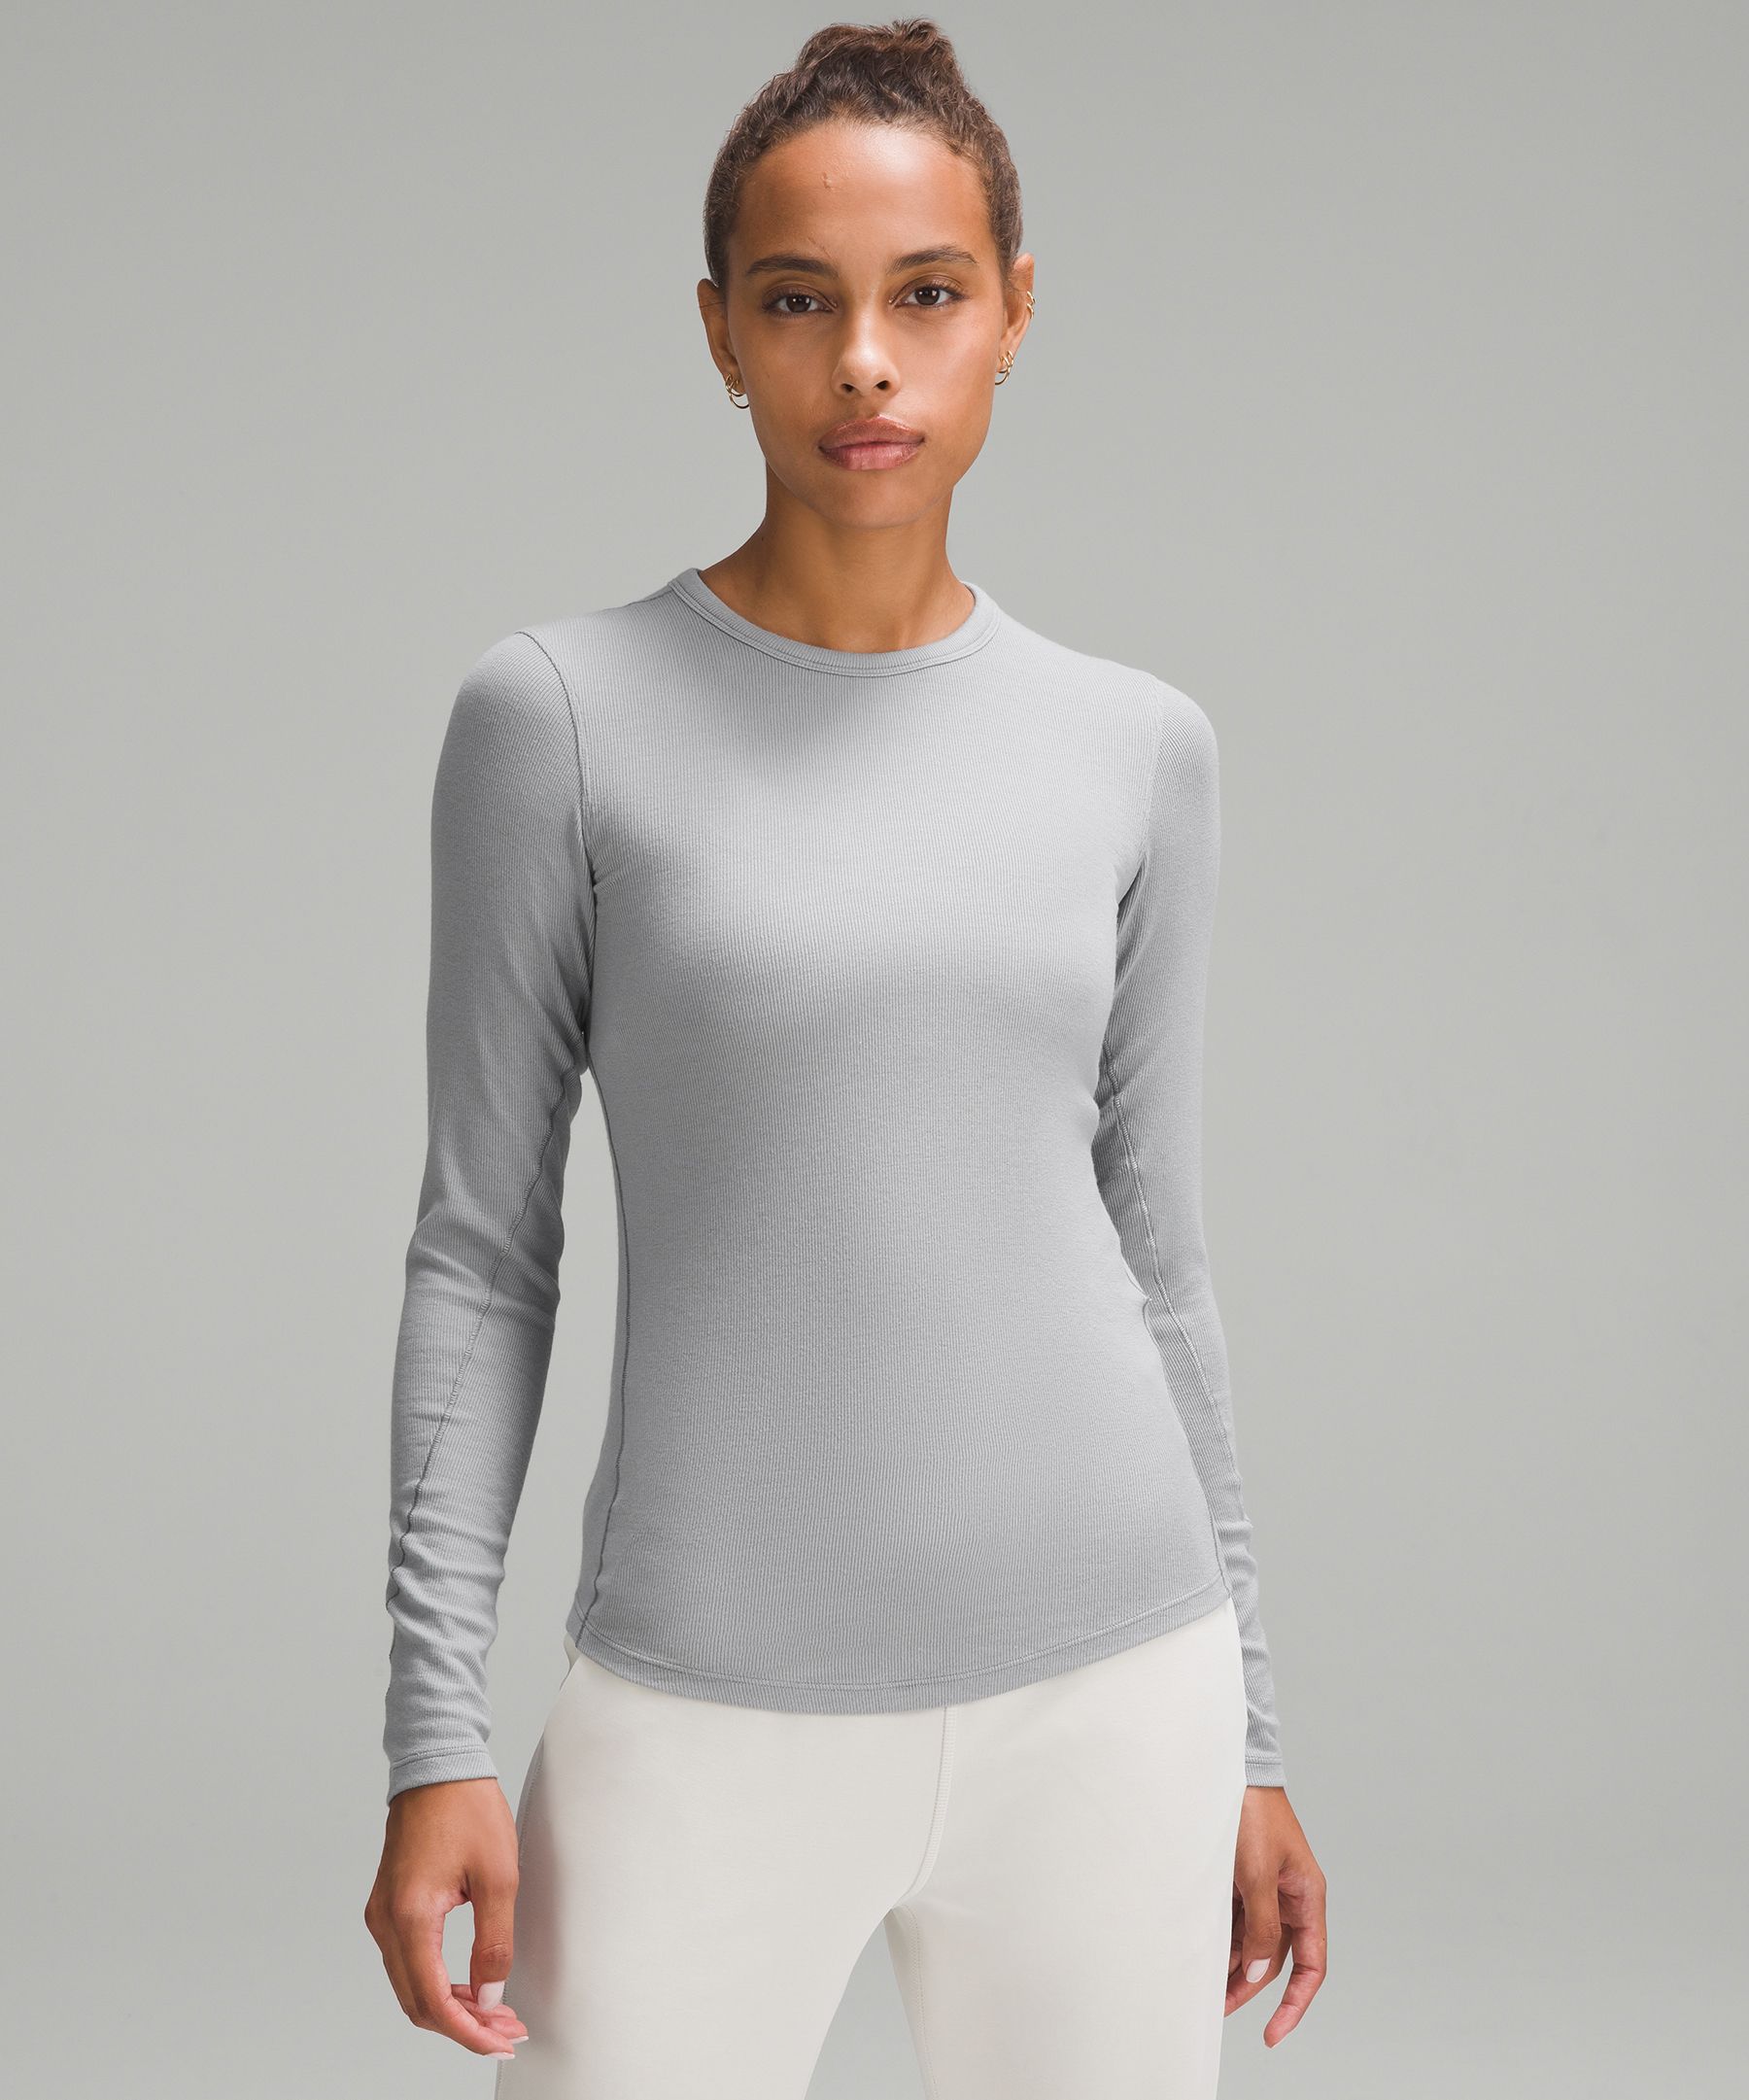 Women's Long Sleeve Shirts | lululemon